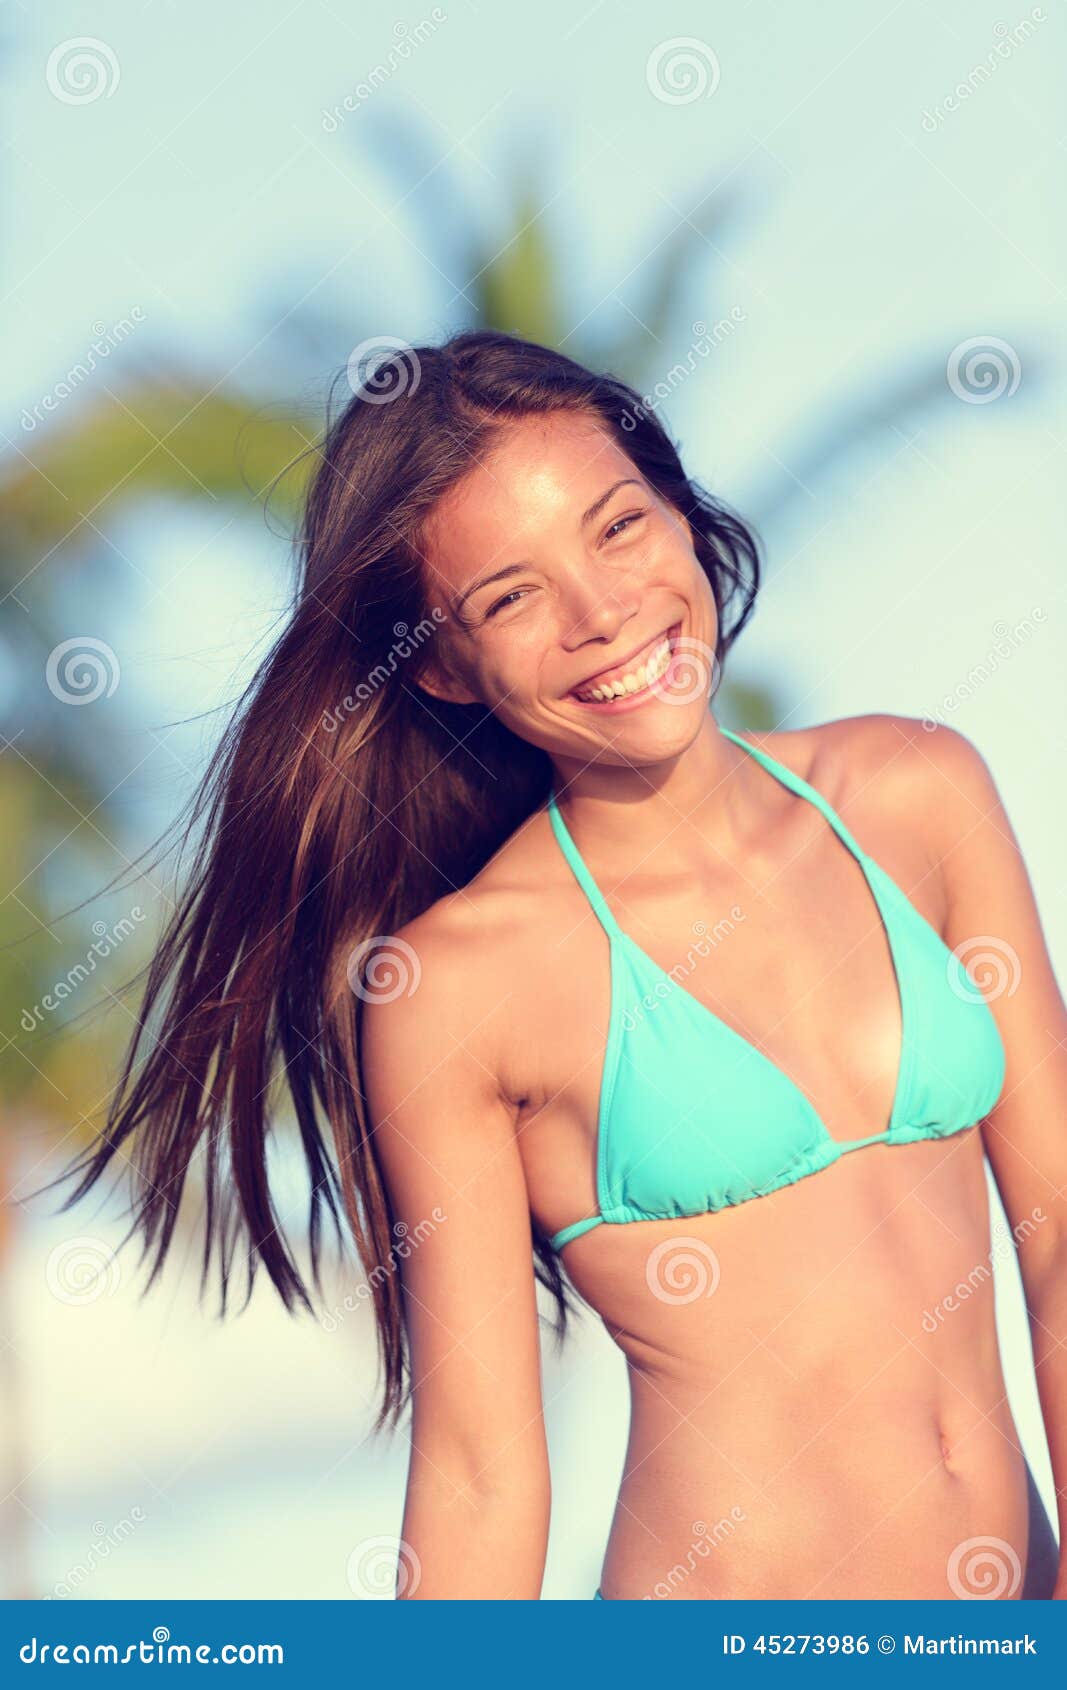 Bikini Beach Woman Happy Smiling Stock Photo